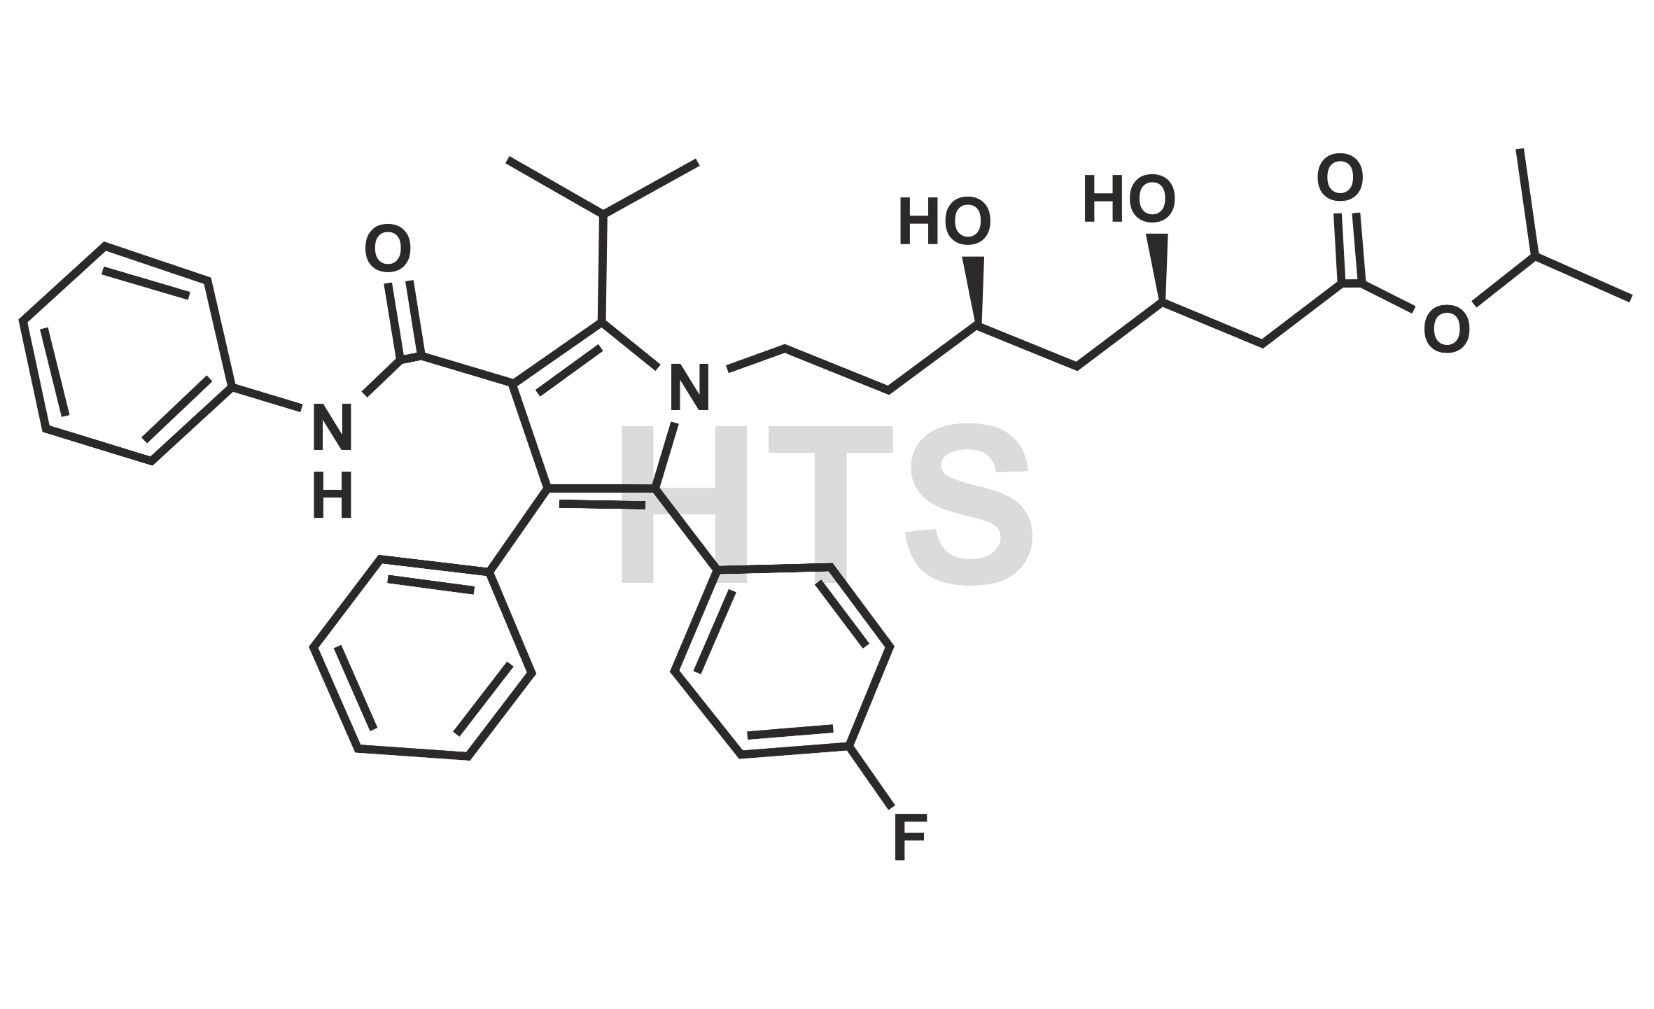 Atorvastatin Acid Isopropyl Ester